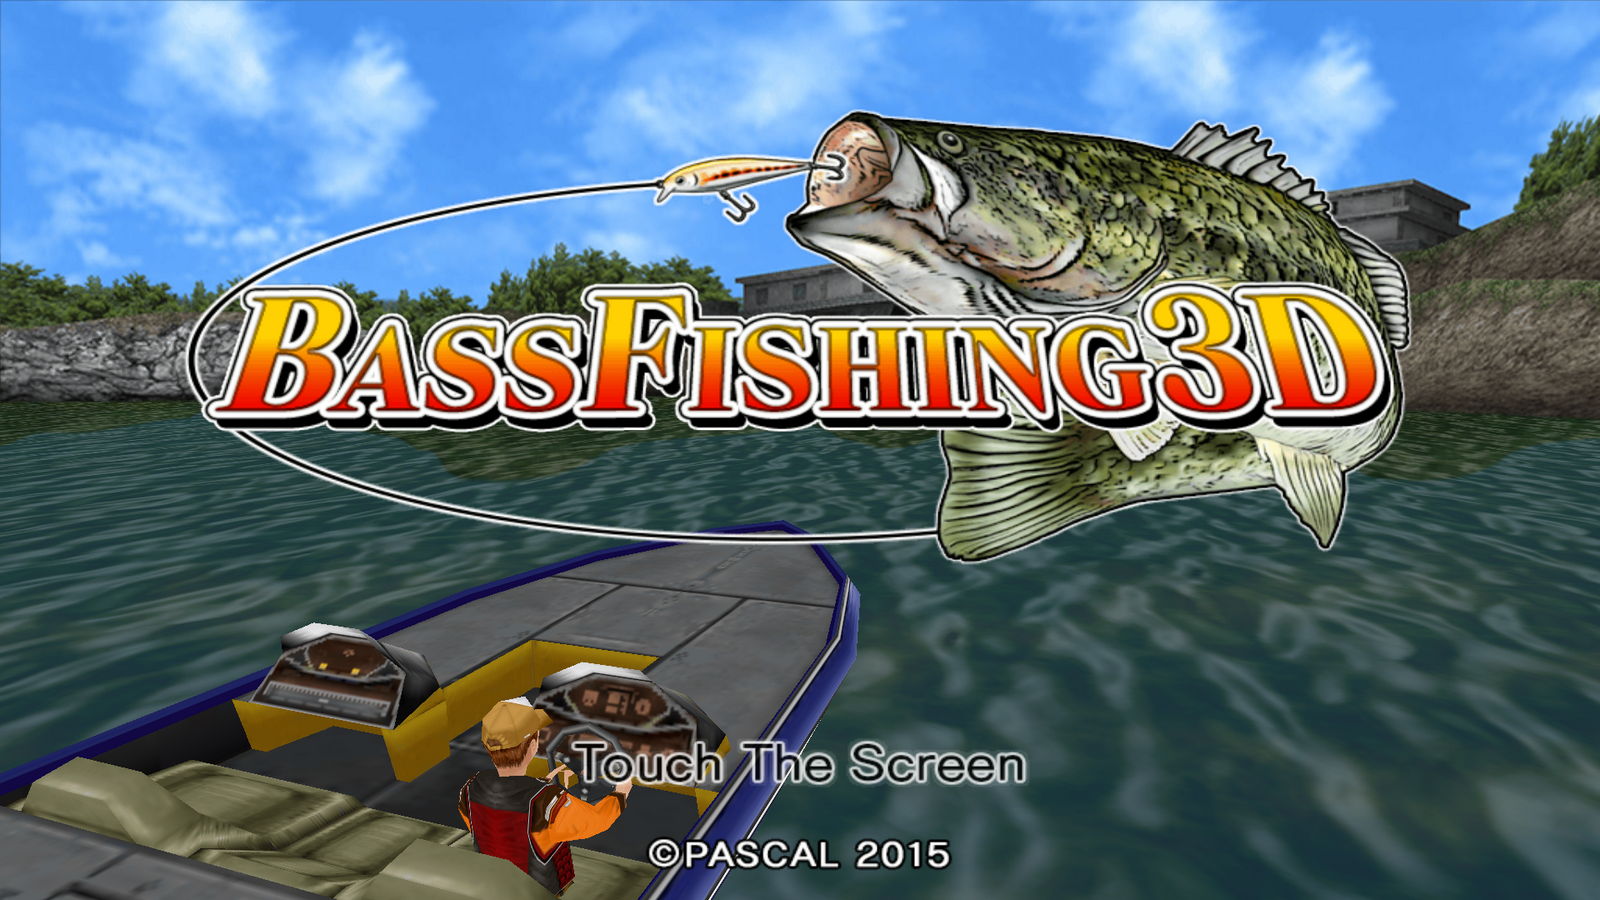 Игра рыбалка. Симулятор рыбалки. Bass Fishing игра. Симулятор рыбалки 3д. Новые игры рыбалки